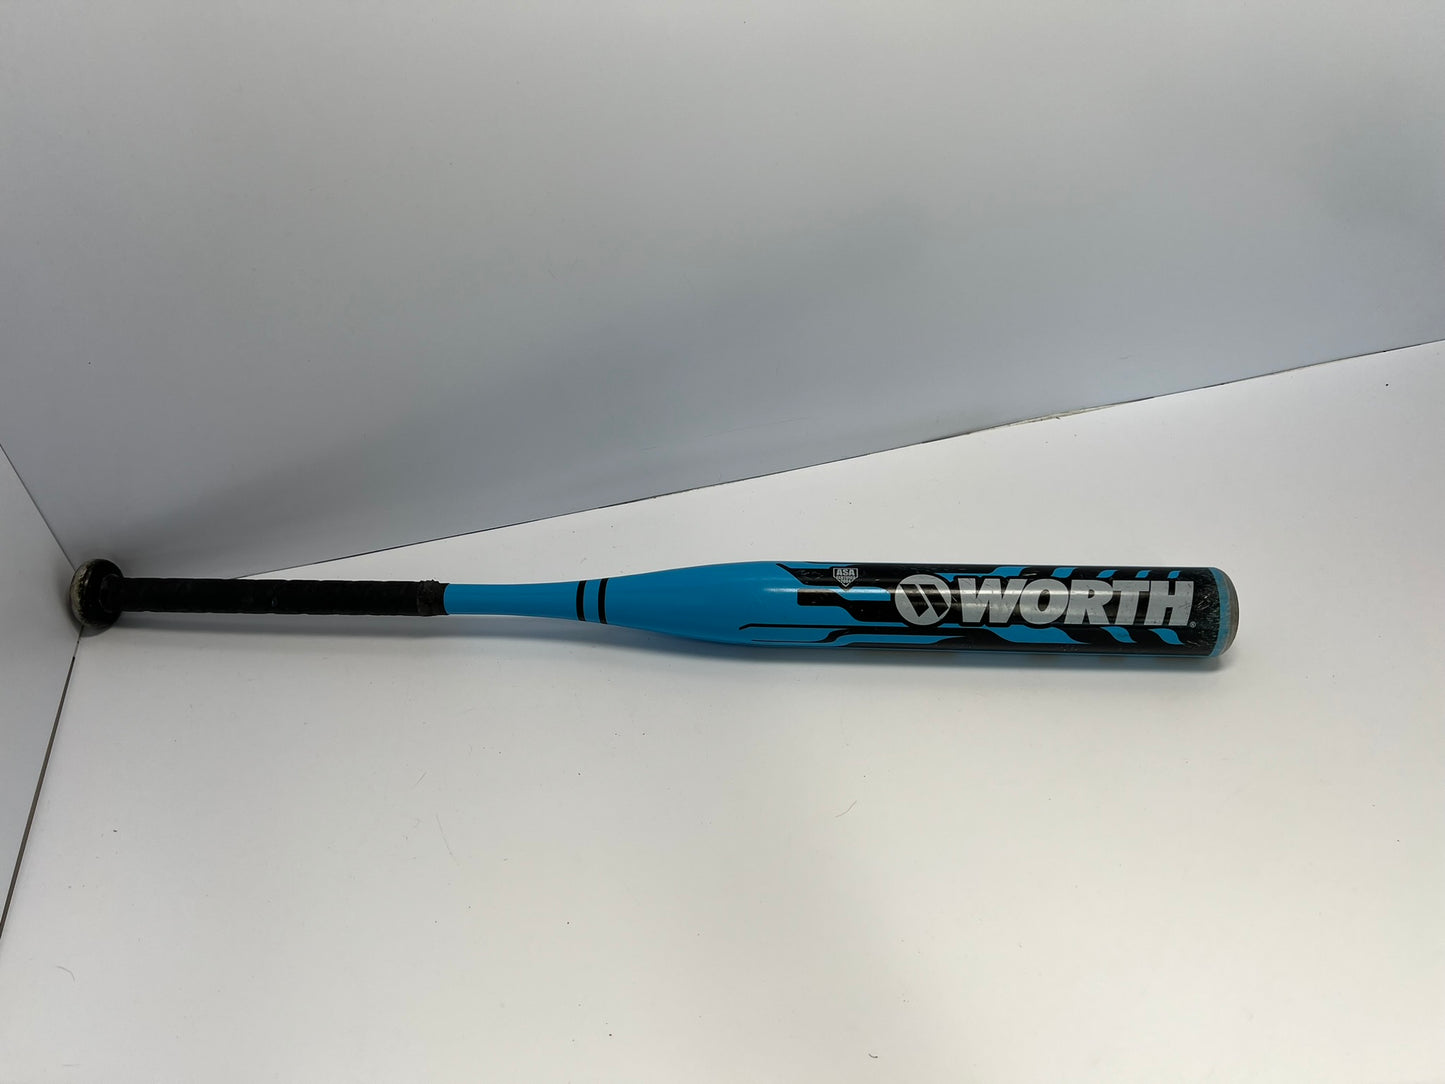 Baseball Bat 30 inch 20 oz Worth Powercell Softball Fast Pitch Blue